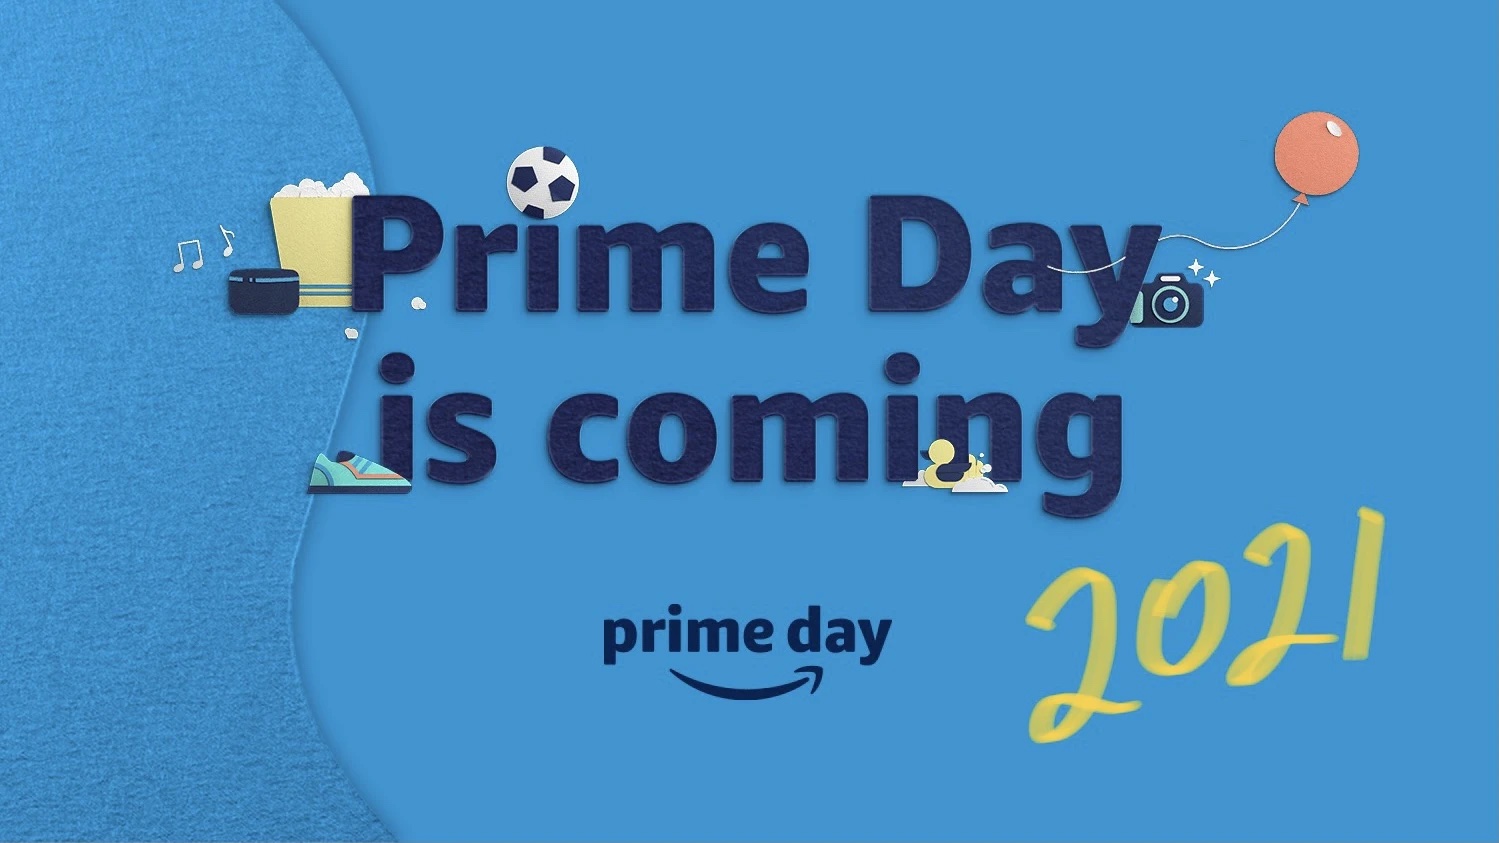 Amazon Prime Day 2021 copia